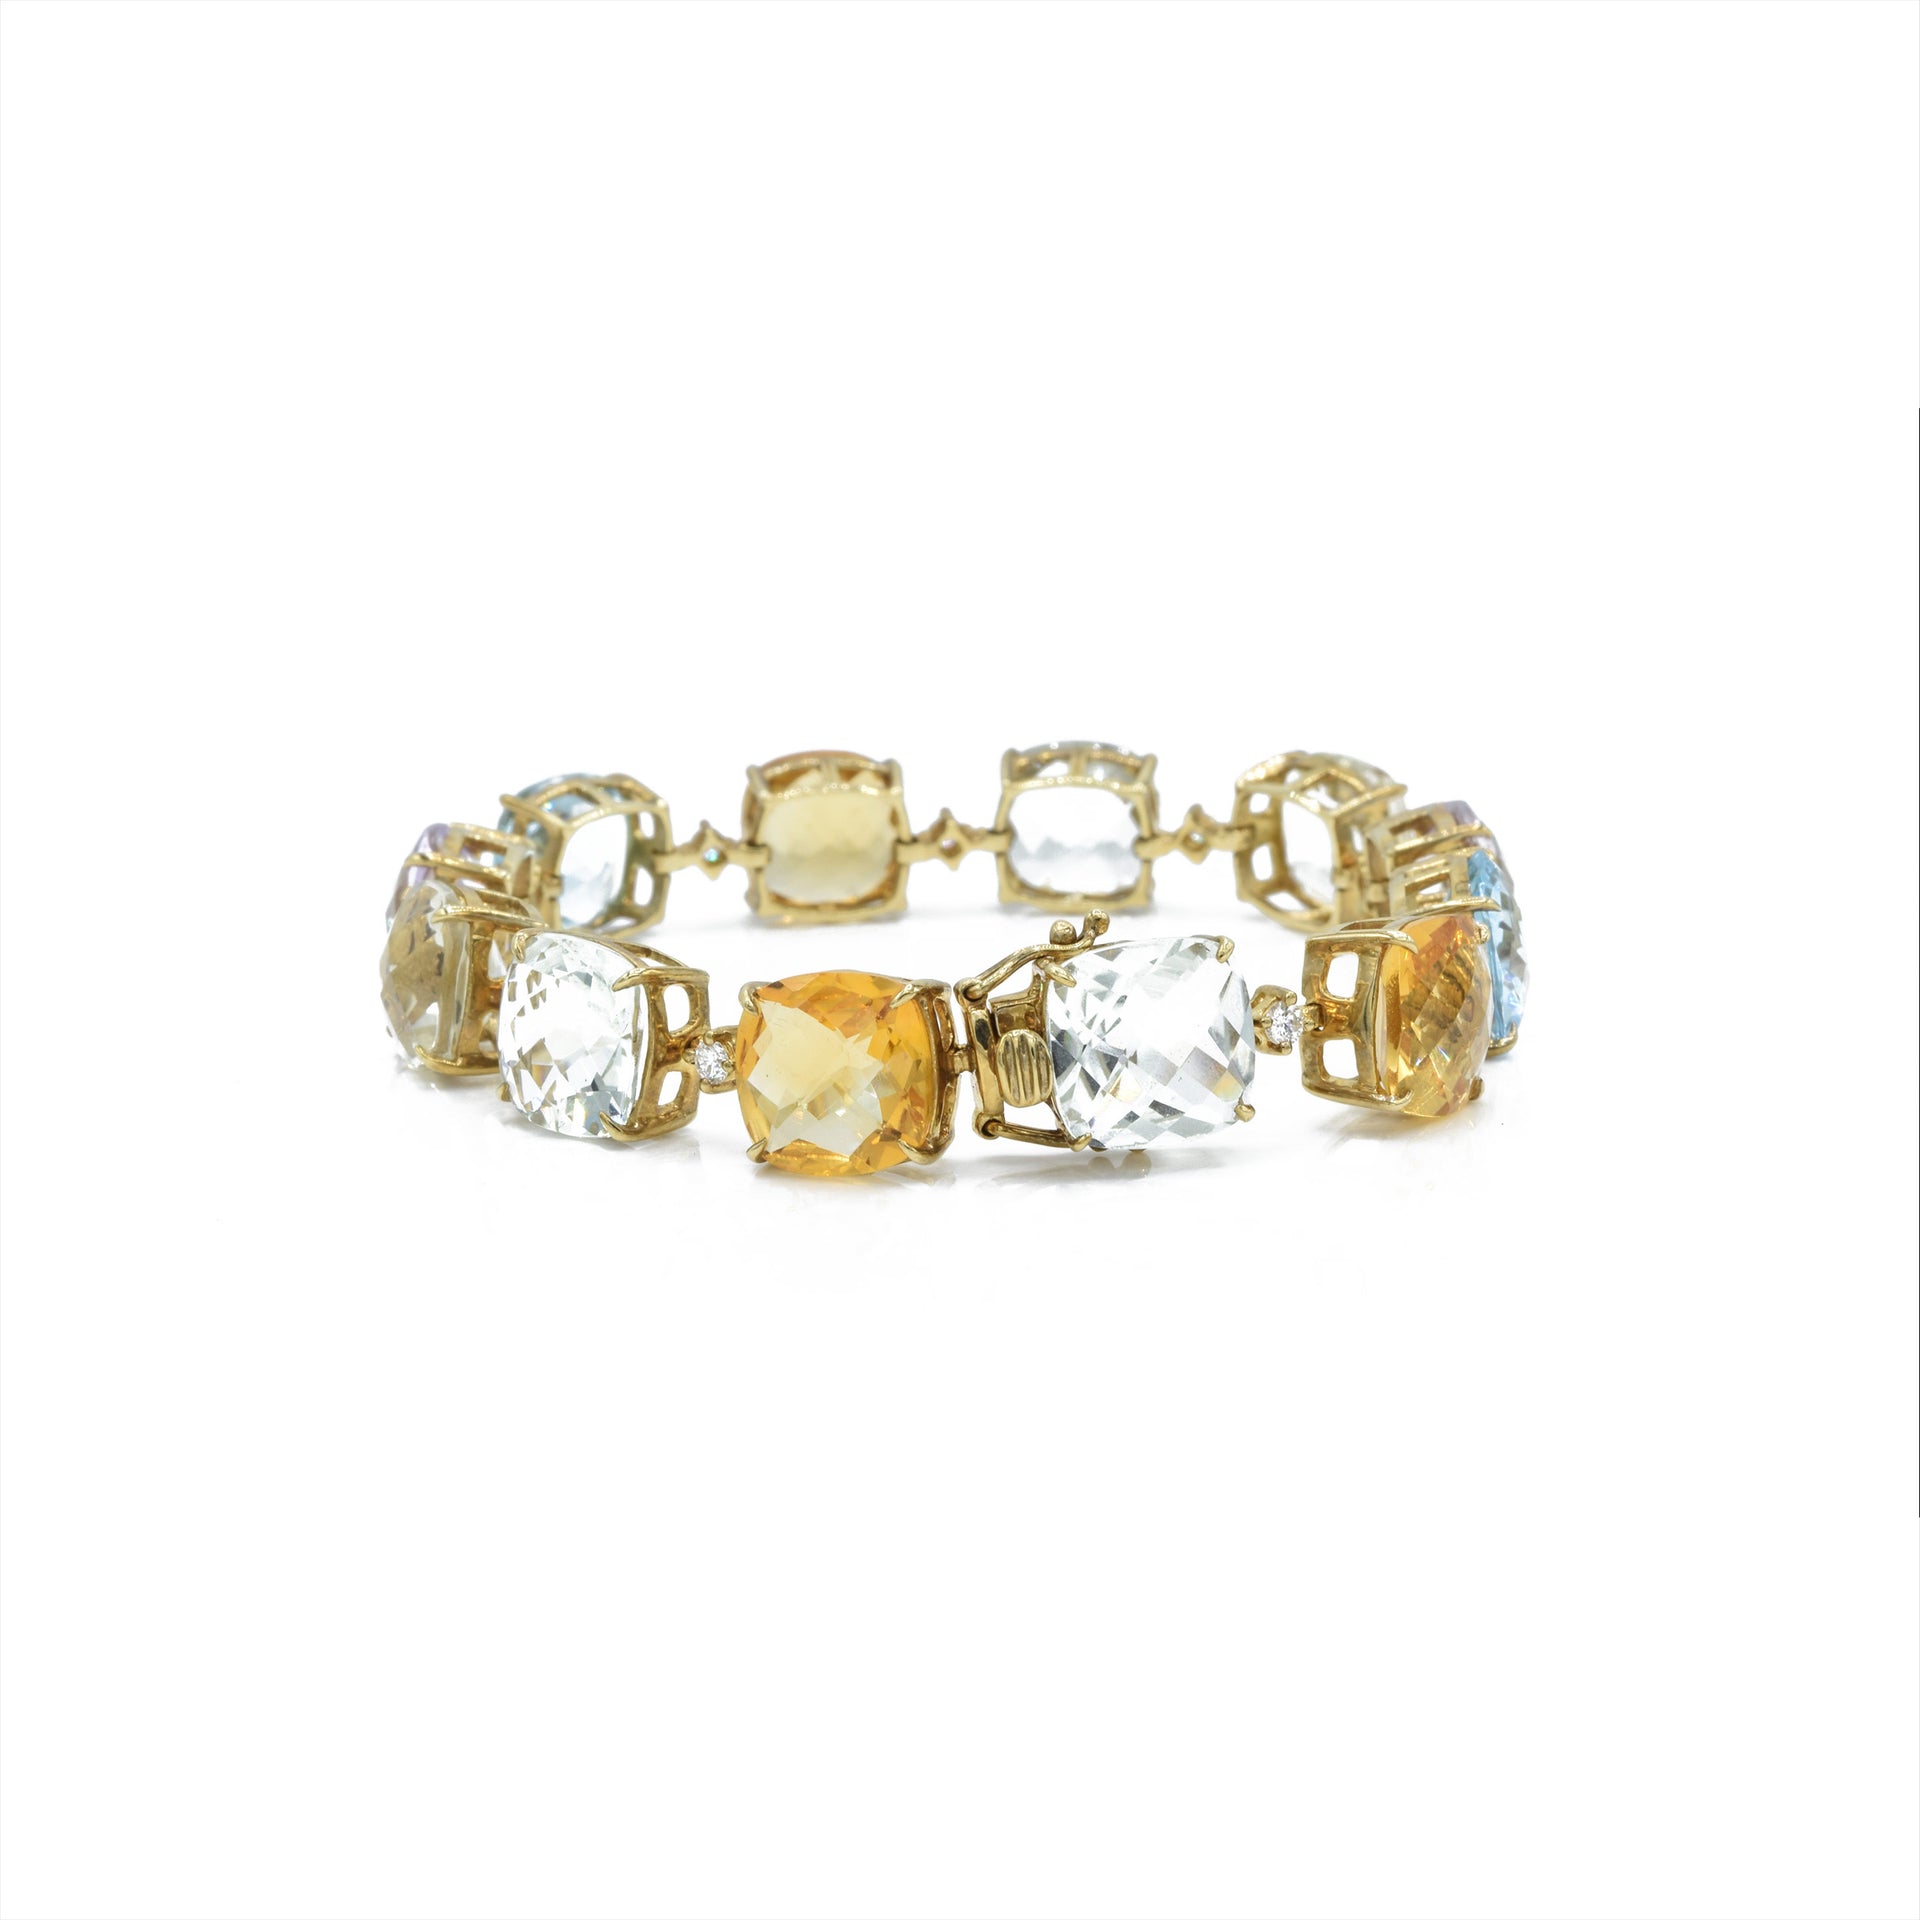 14kt Yellow Gold Semi Precious Stone Bracelet